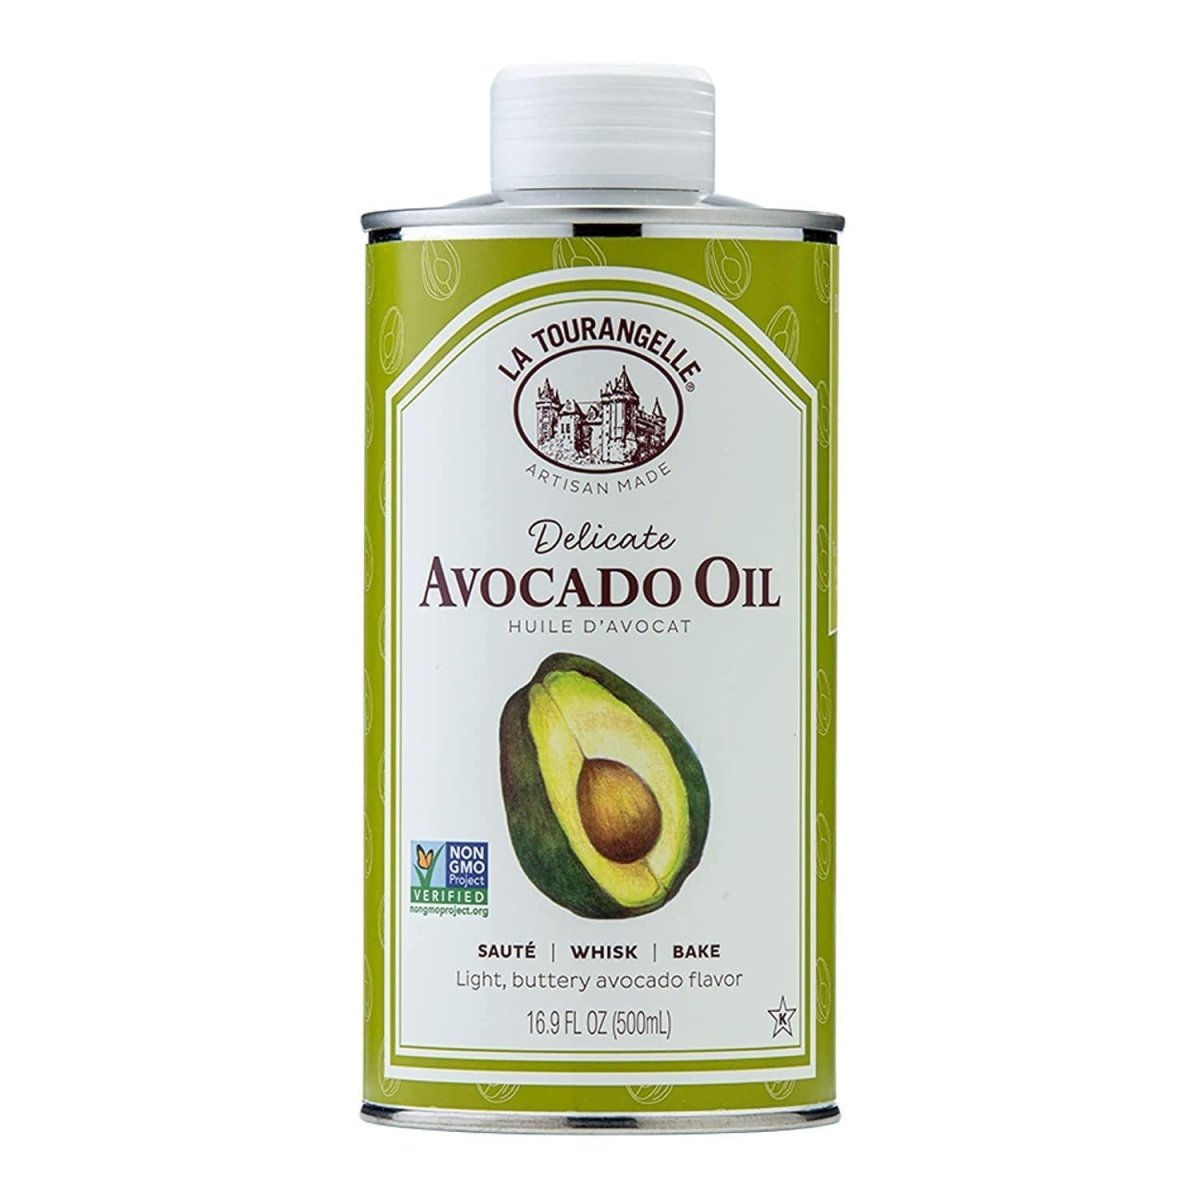 La Tourangelle - Avocado Oil (500ML) - The Epicurean Trader